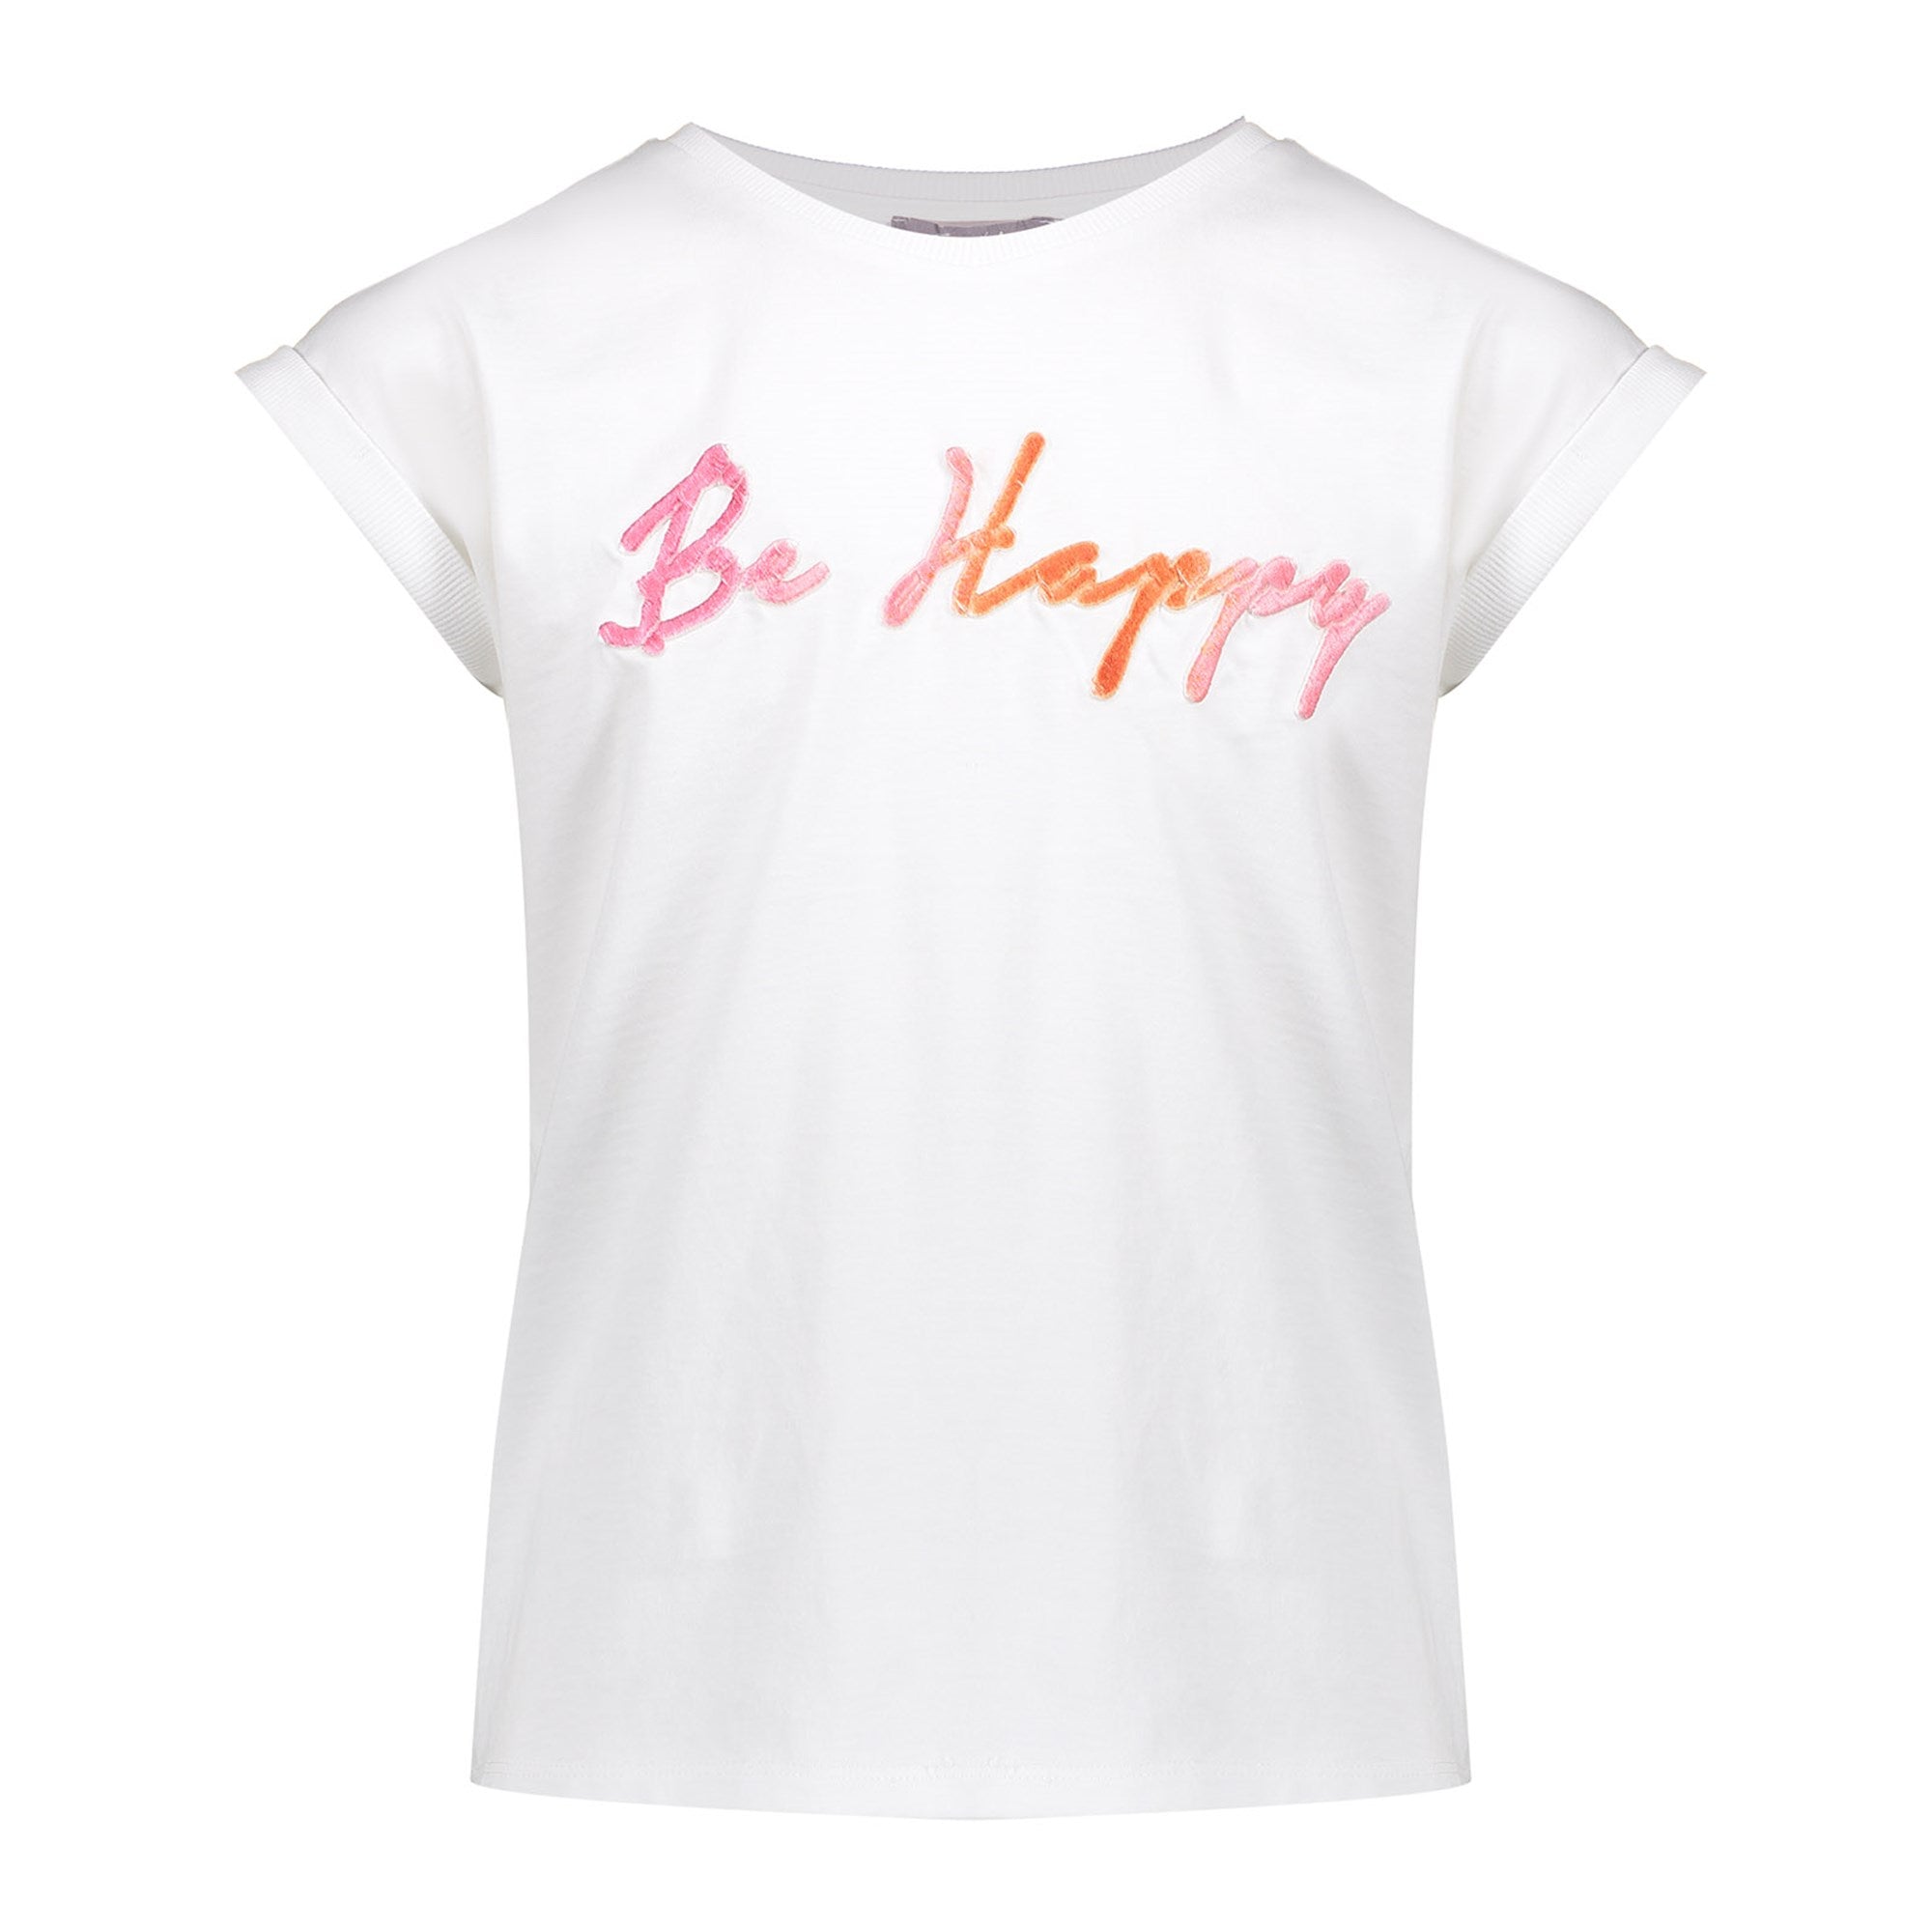 Geisha T-shirt "be happy" puff text